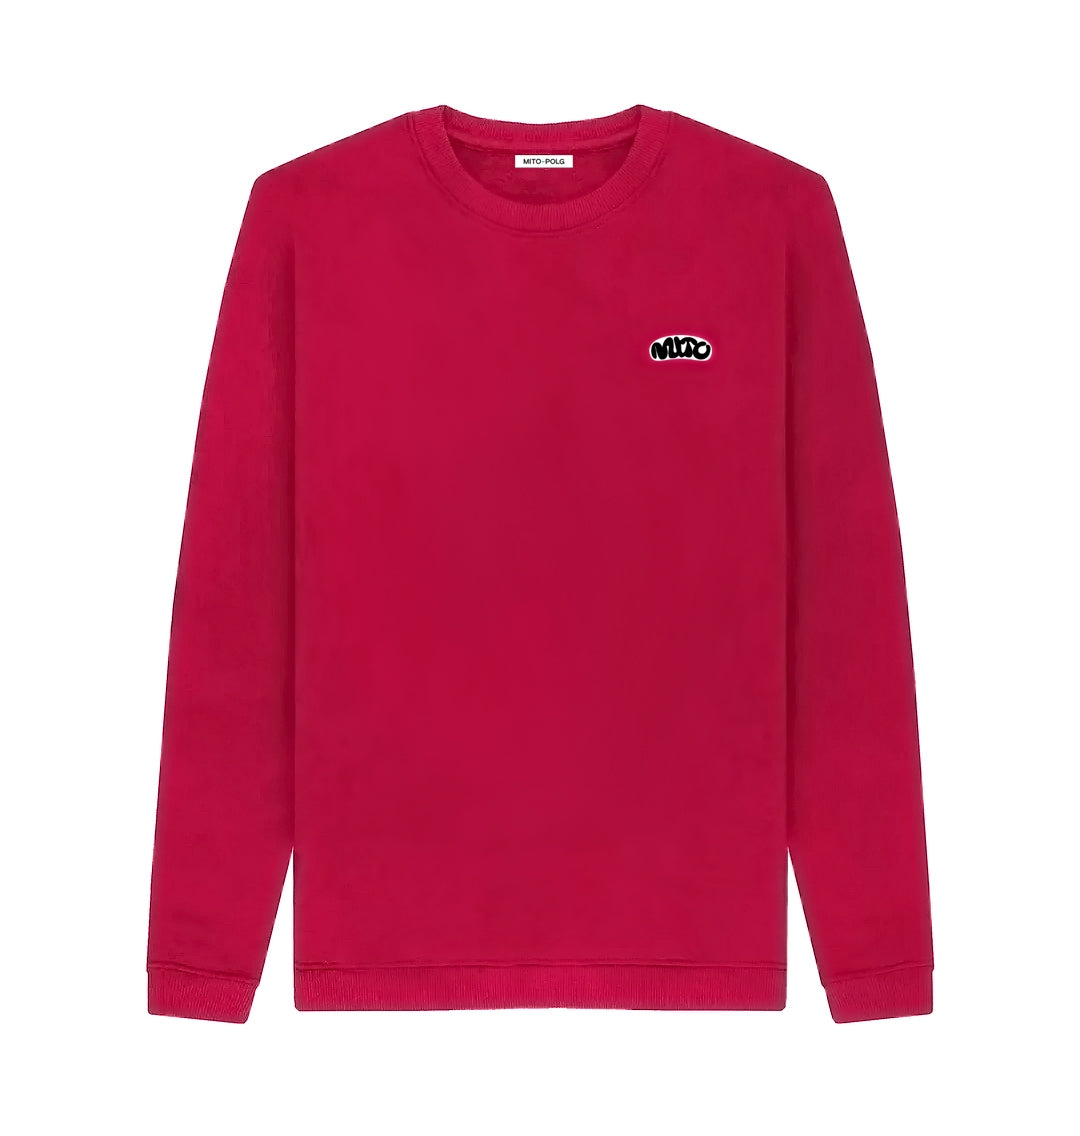 Red Embroidered MITO Crewneck Sweatshirt